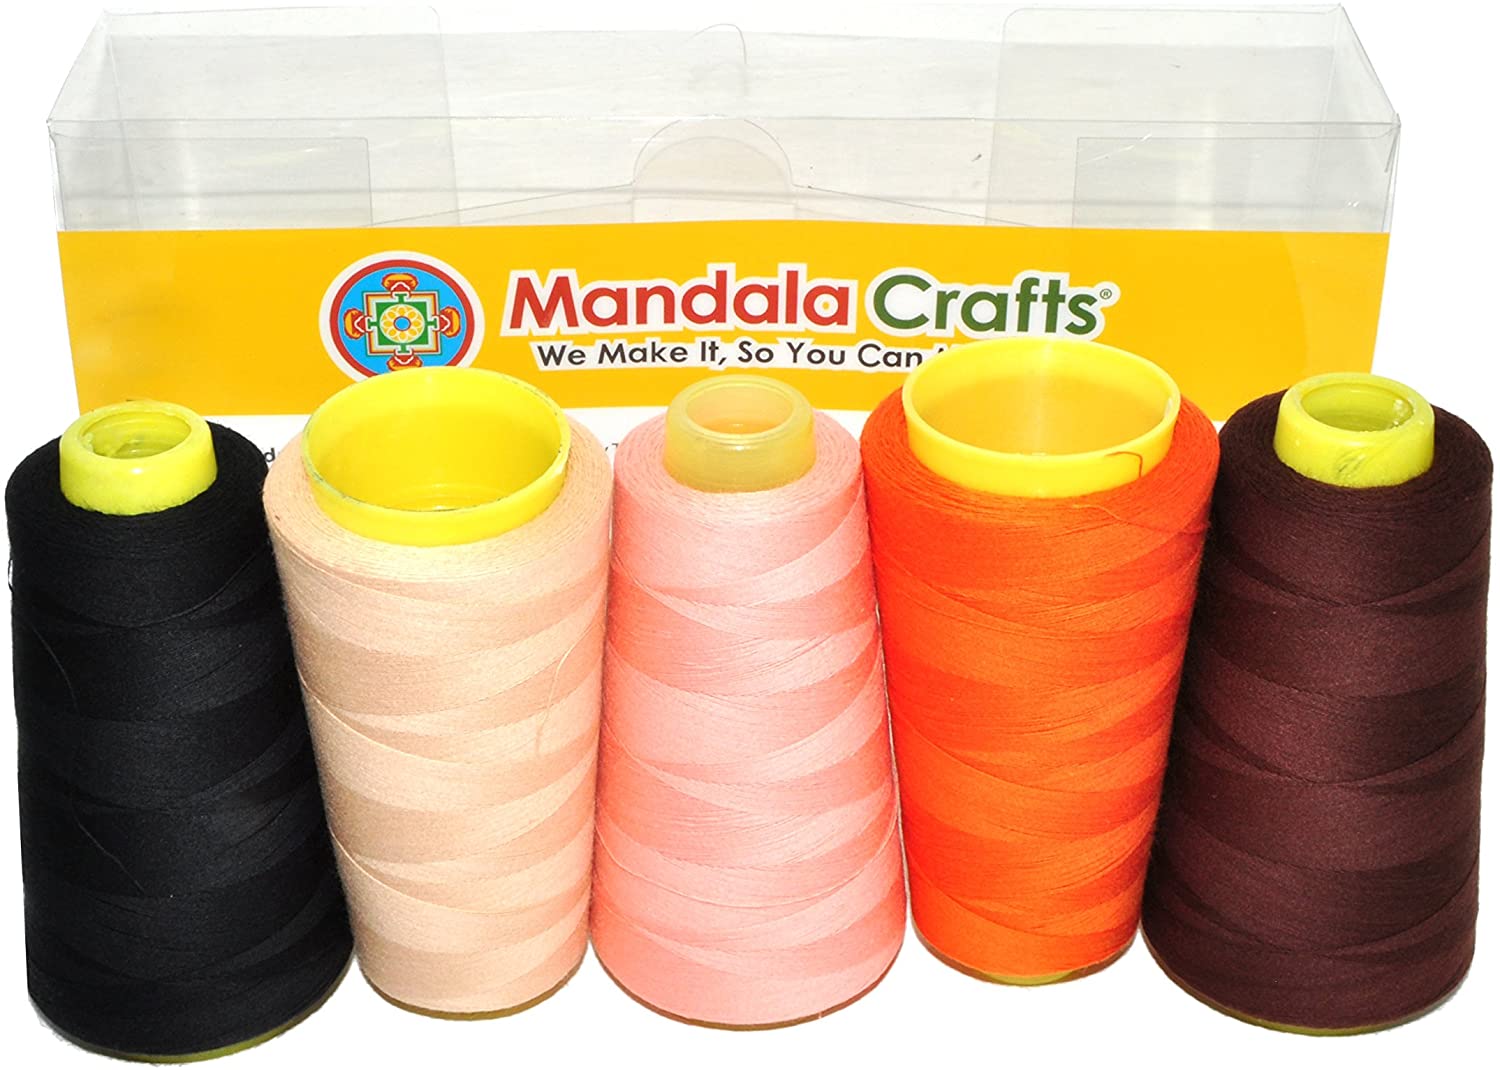  Mandala Crafts All Purpose Sewing Thread Spools